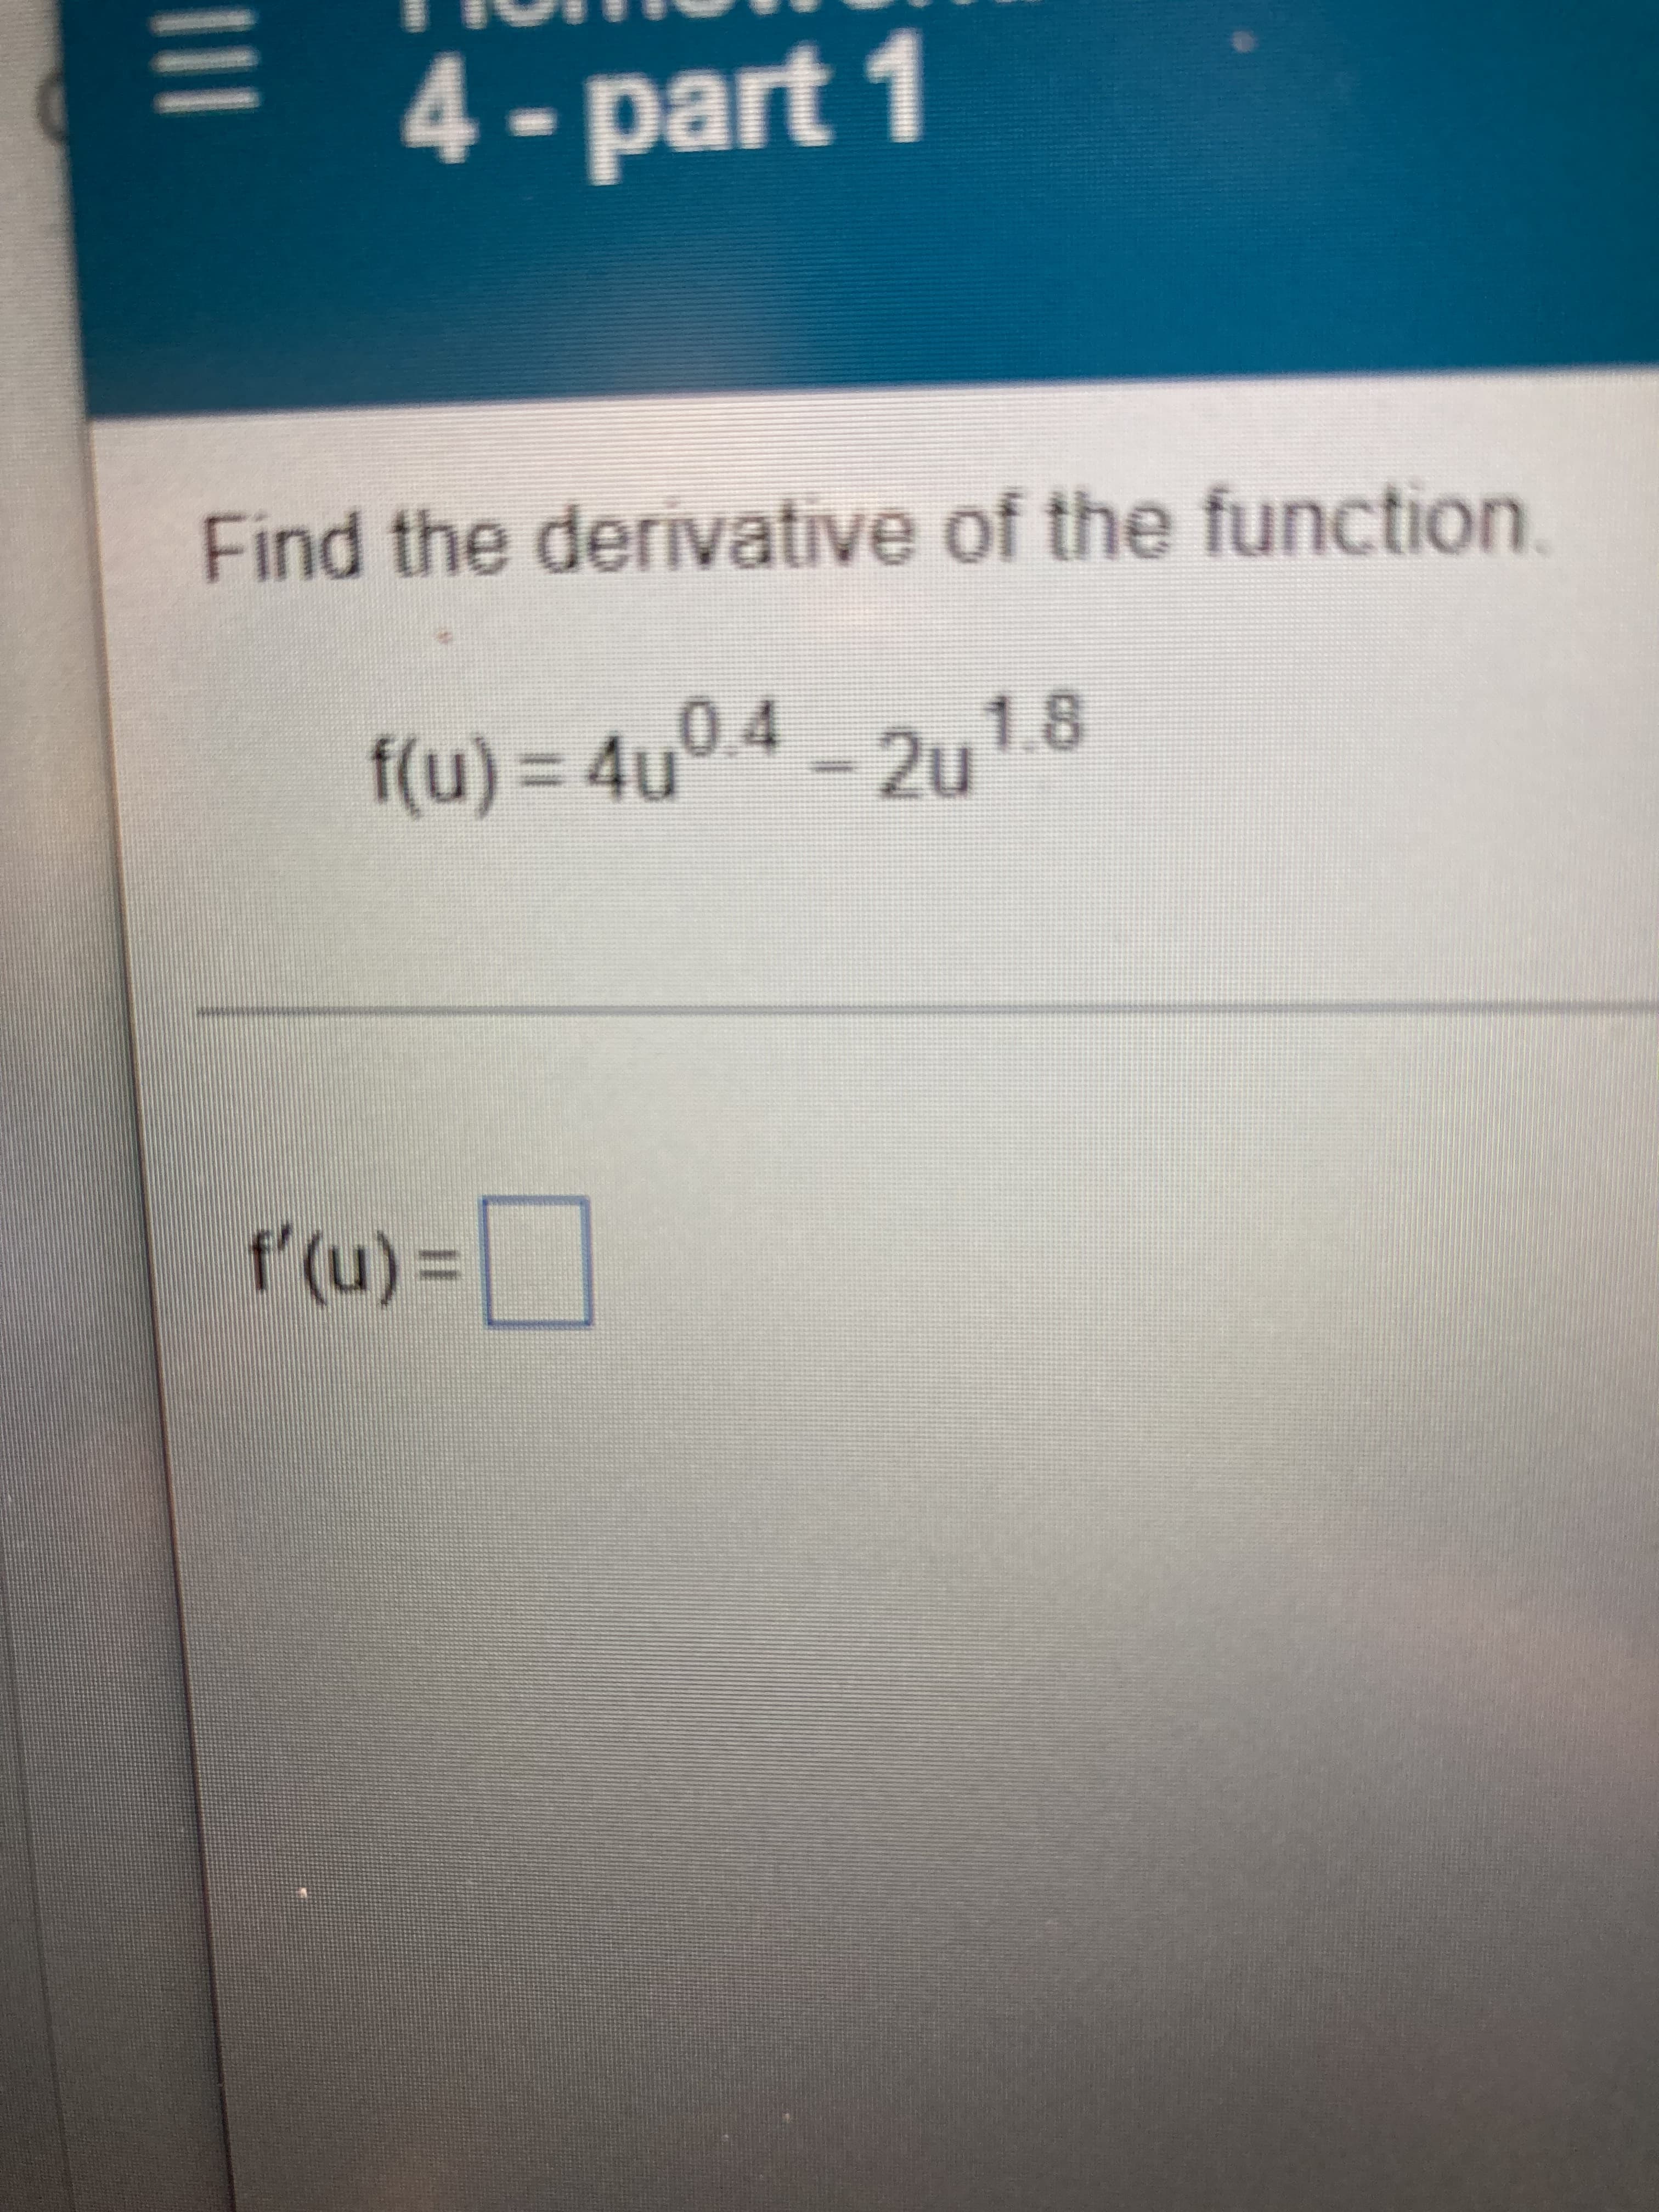 4- part 1
Find the derivative of the function
f(u) = 4u° 4 - 2u1.8
0.4
%3D
= (n),1
